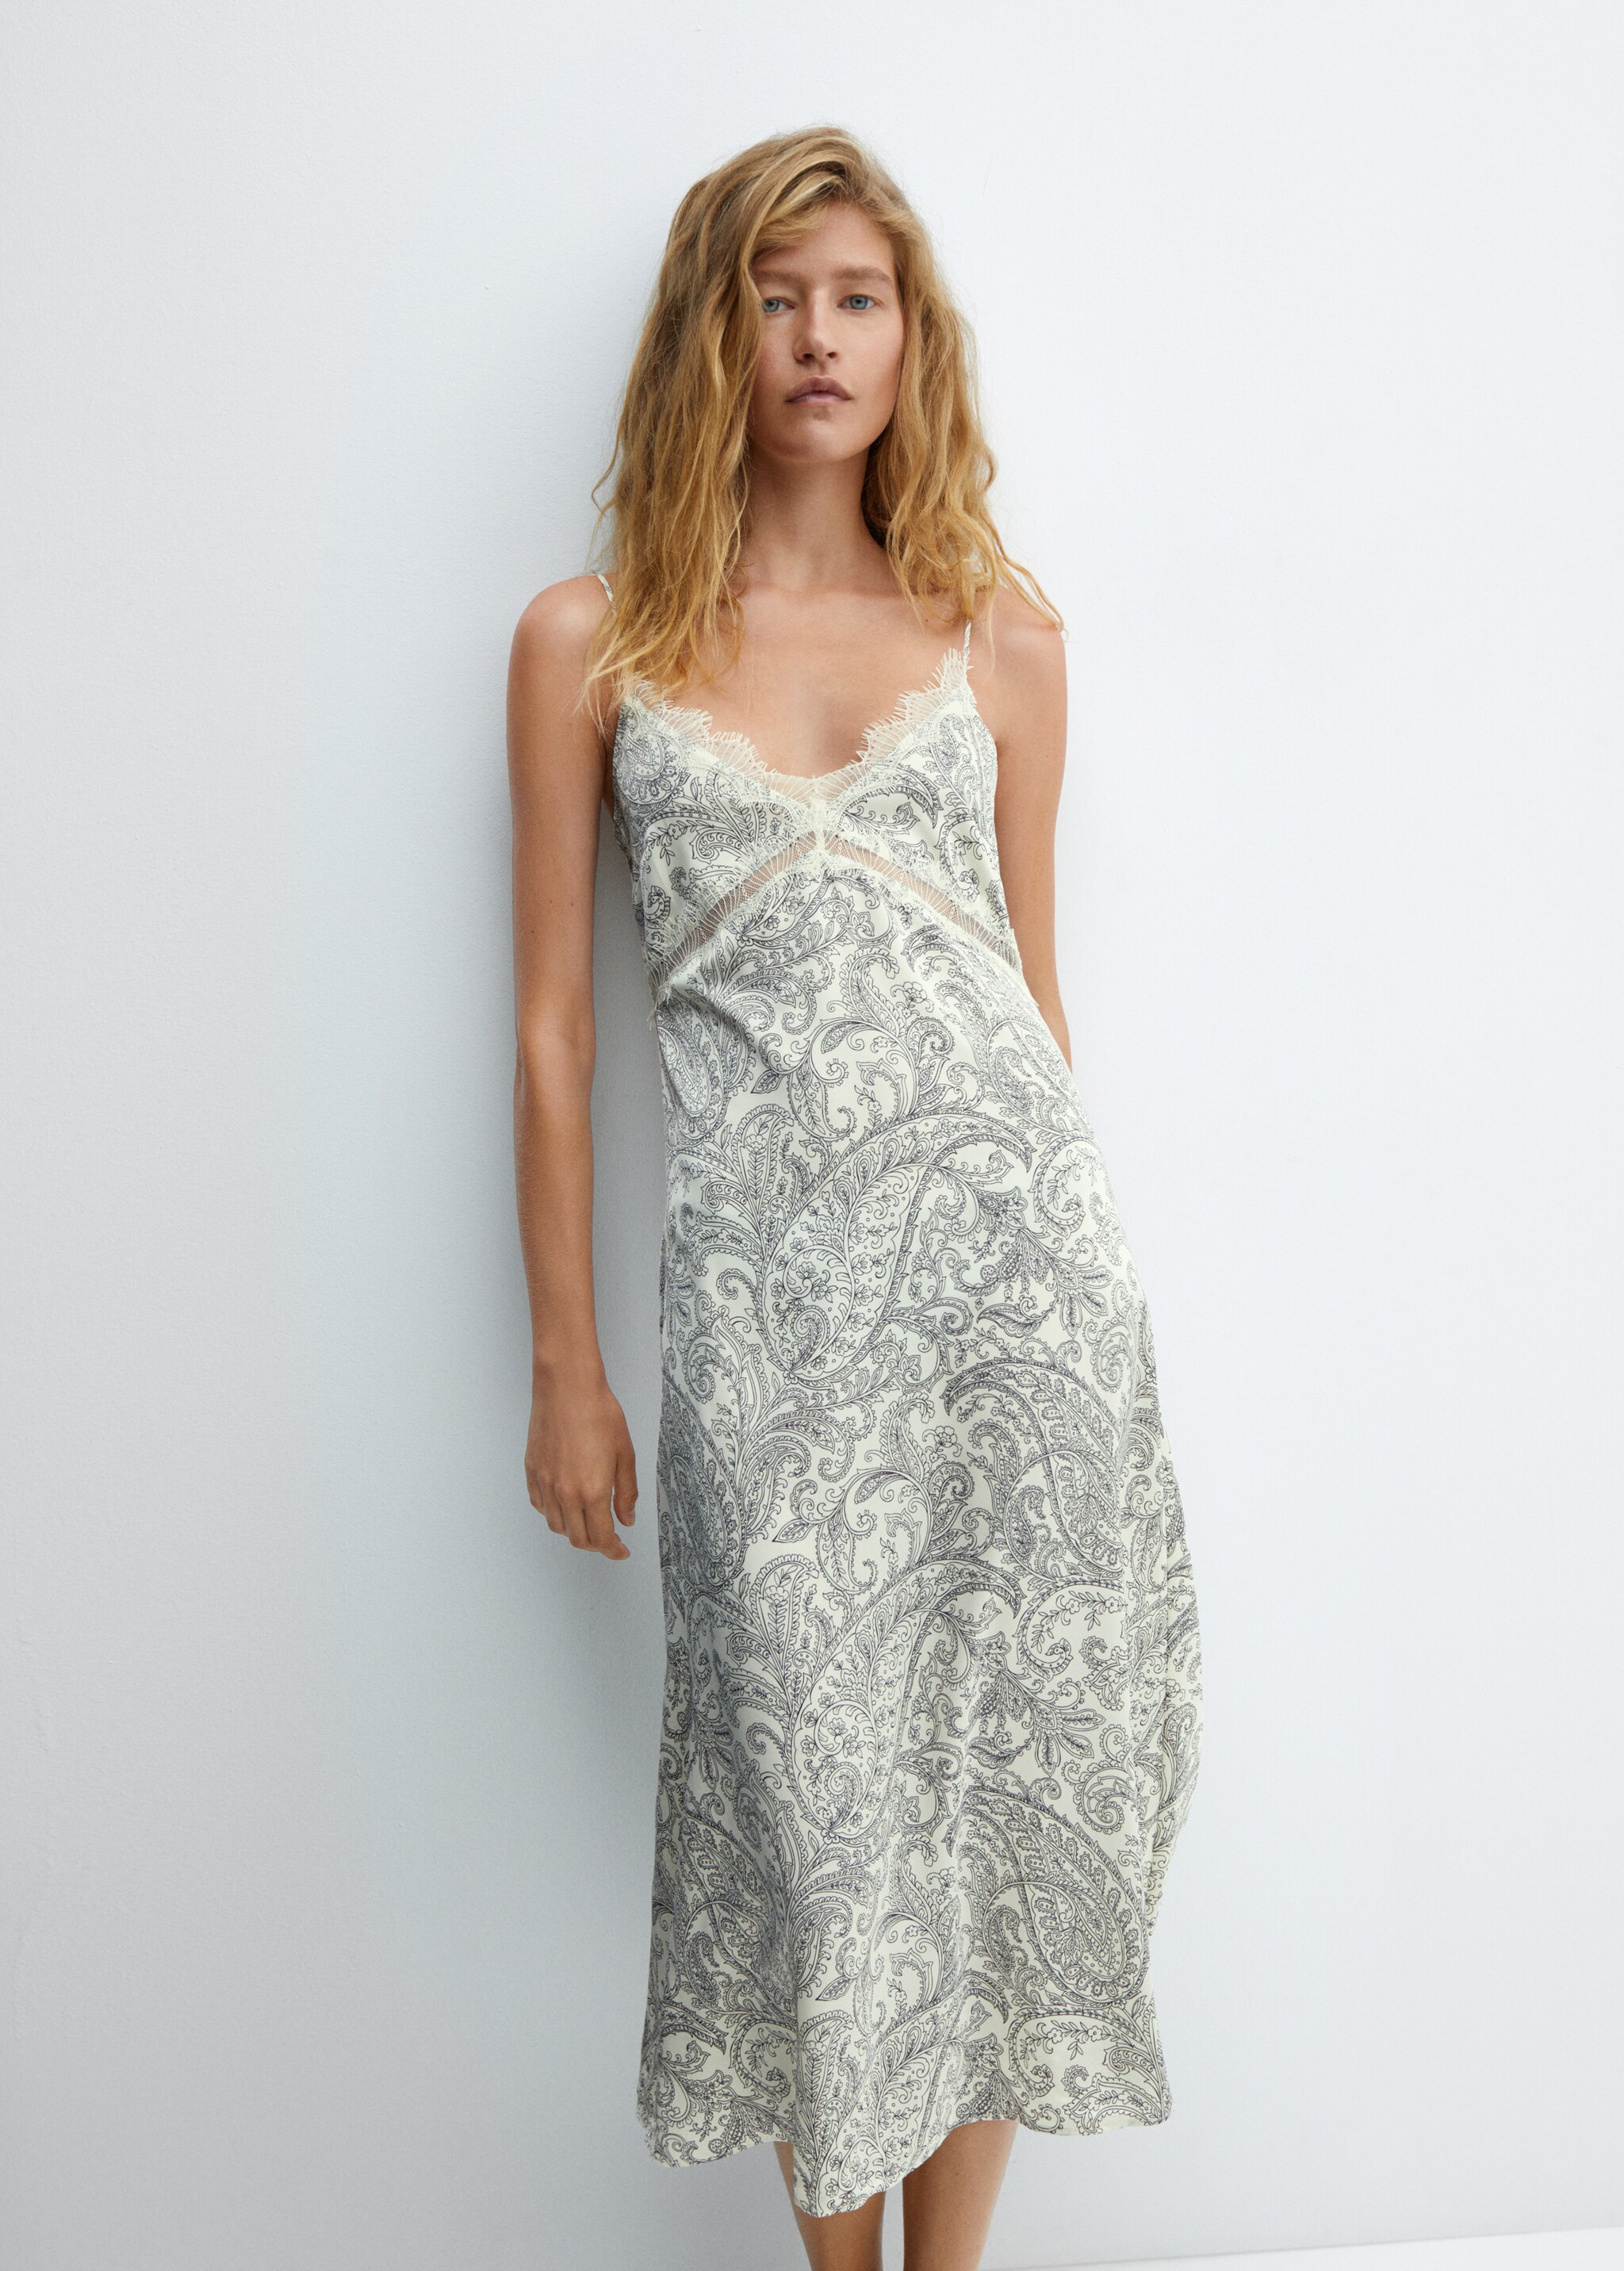 Lingerie-Kleid mit Paisley-Muster - Mittlere Ansicht